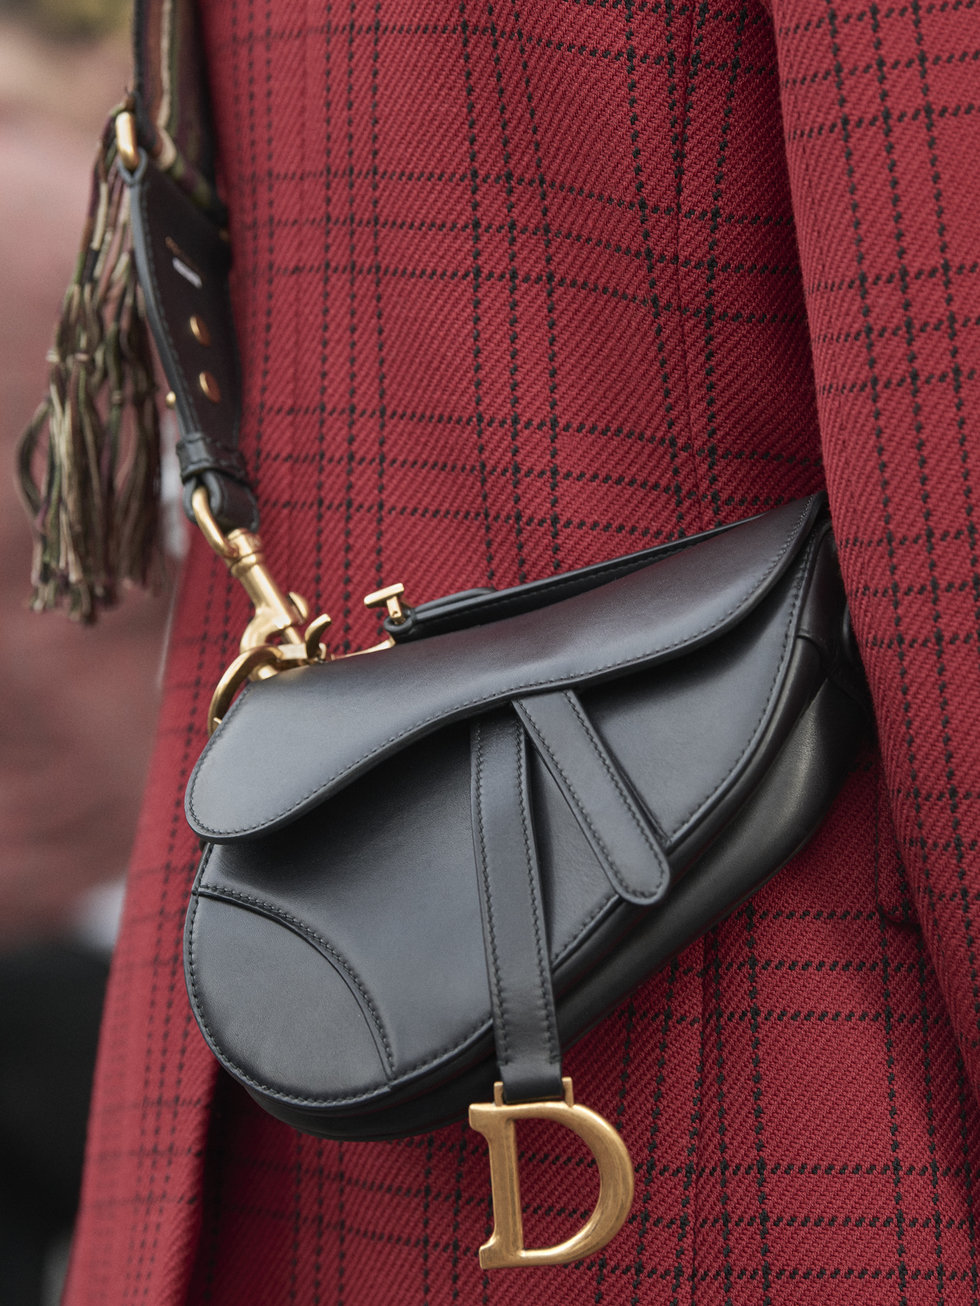 Dior's Iconic Saddle Bag Makes a Comeback - PAPER